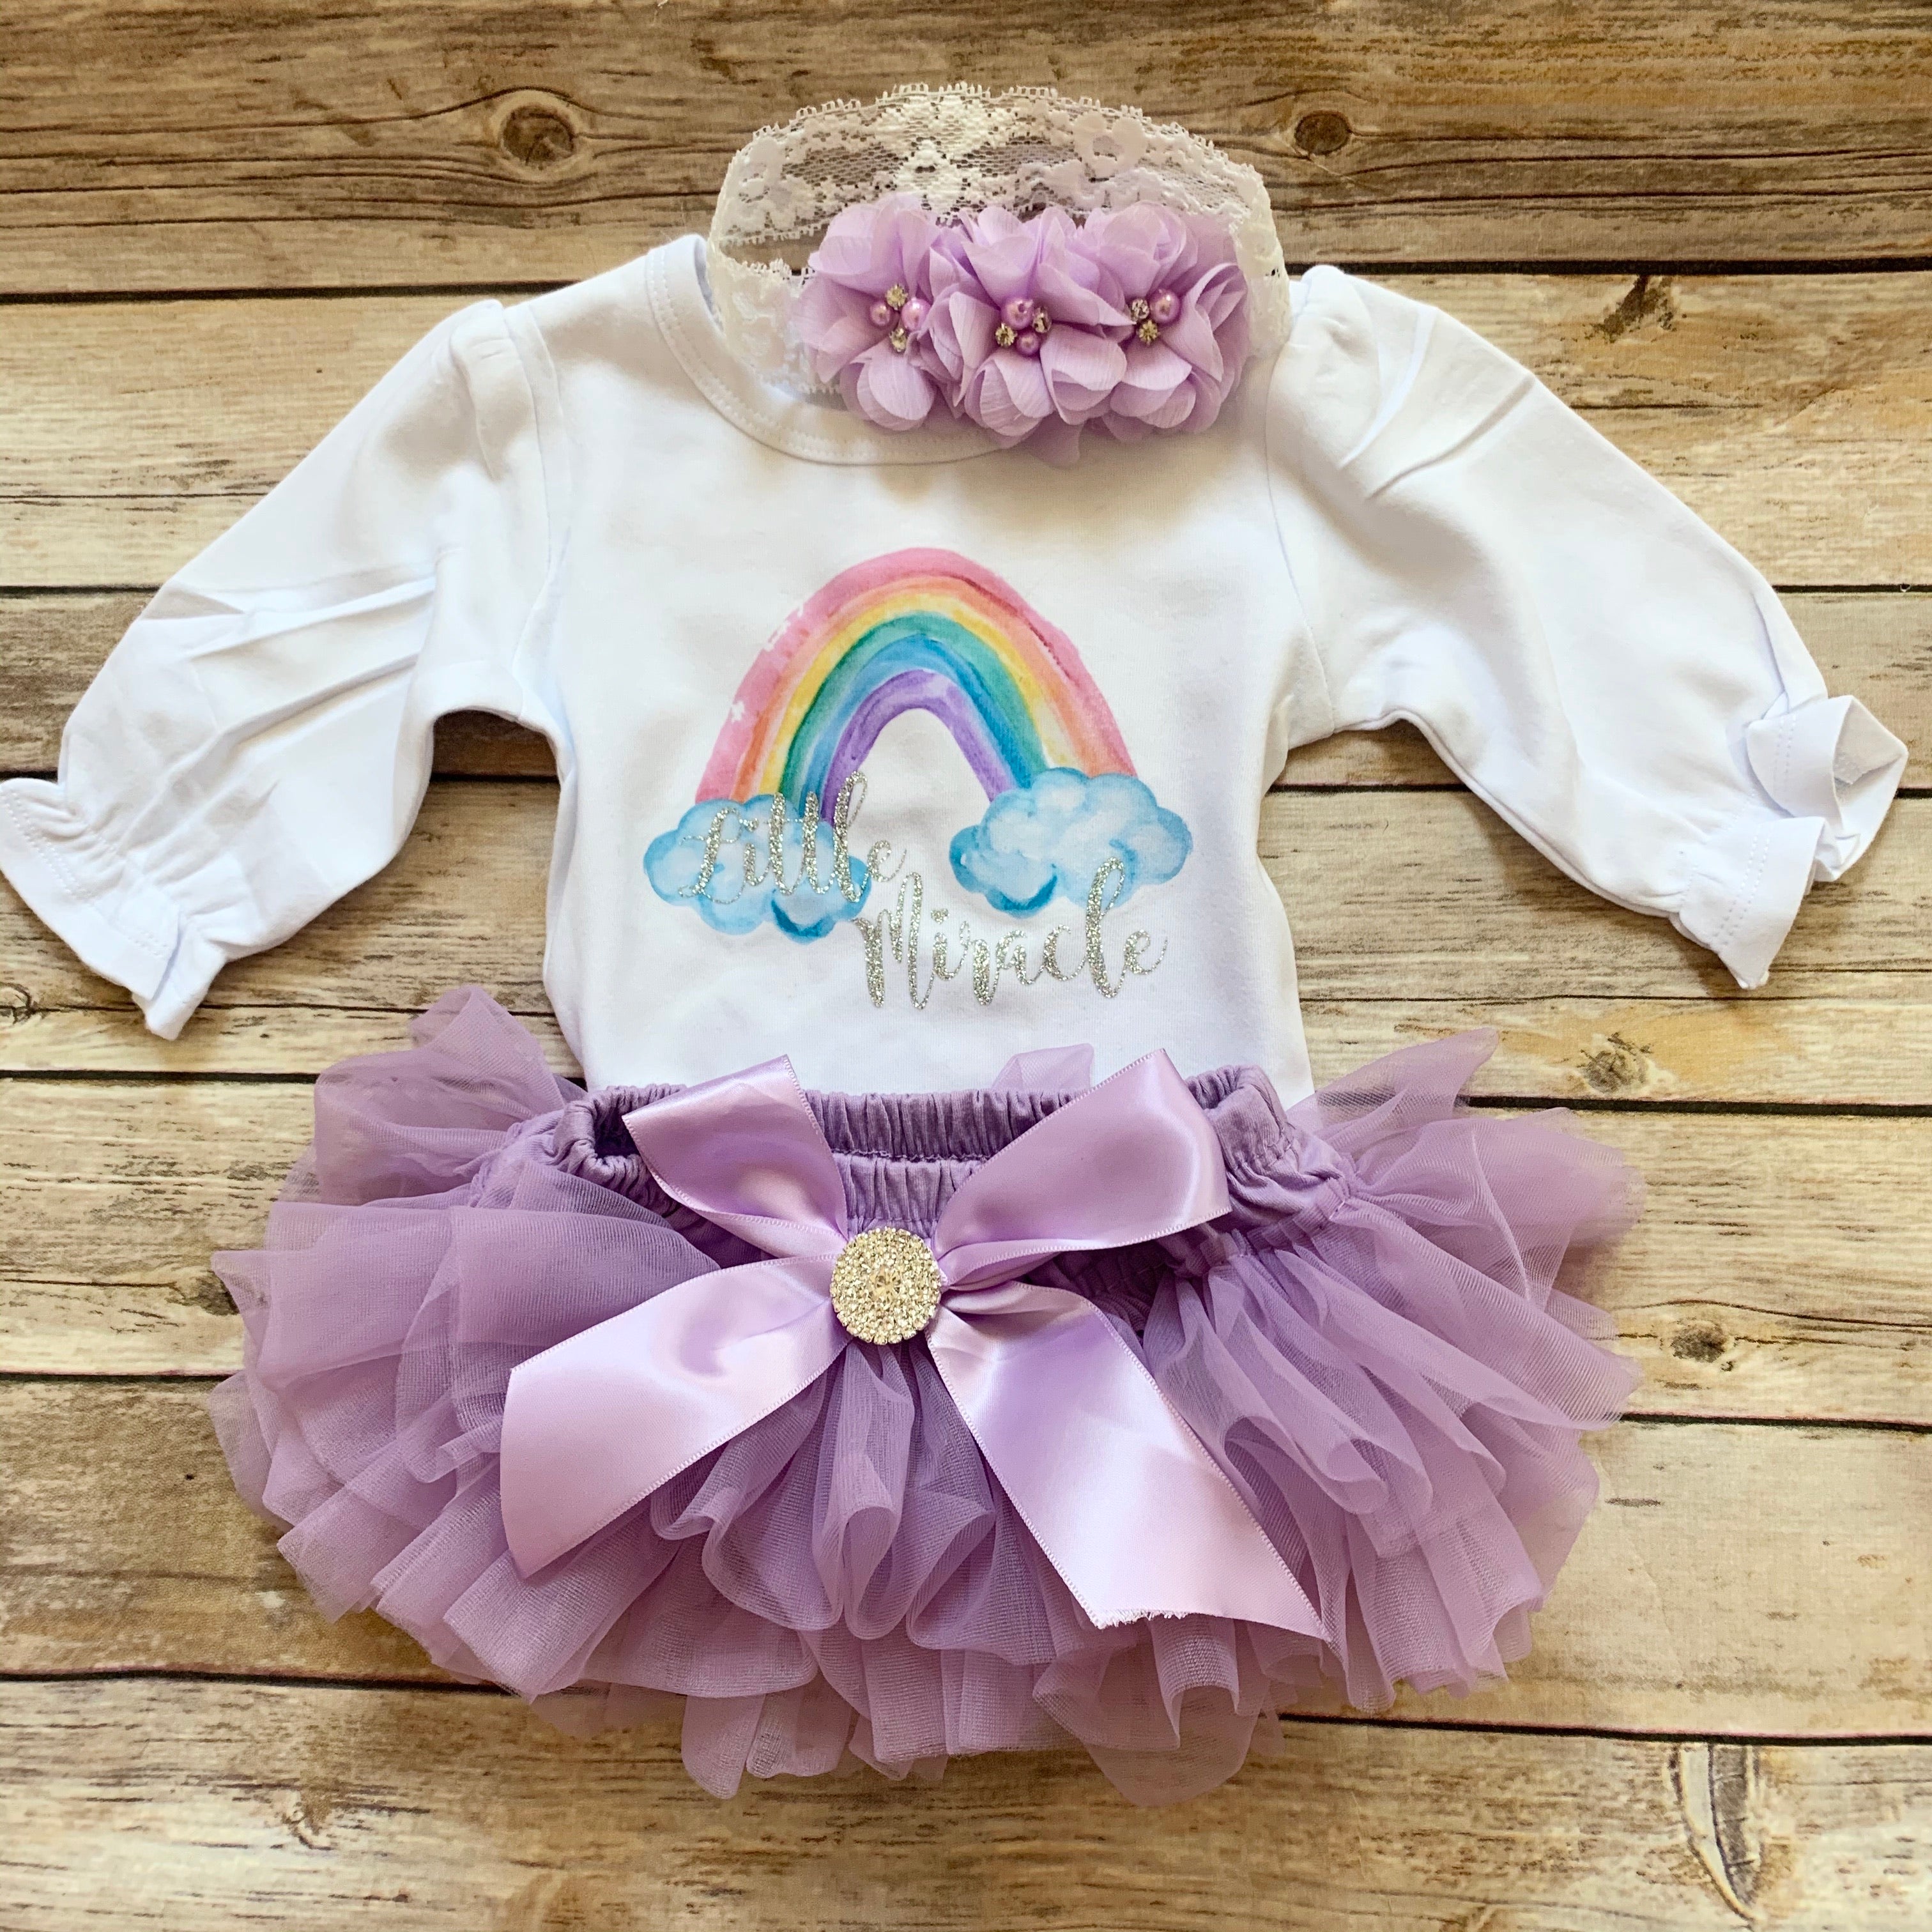 Rainbow baby - lavender